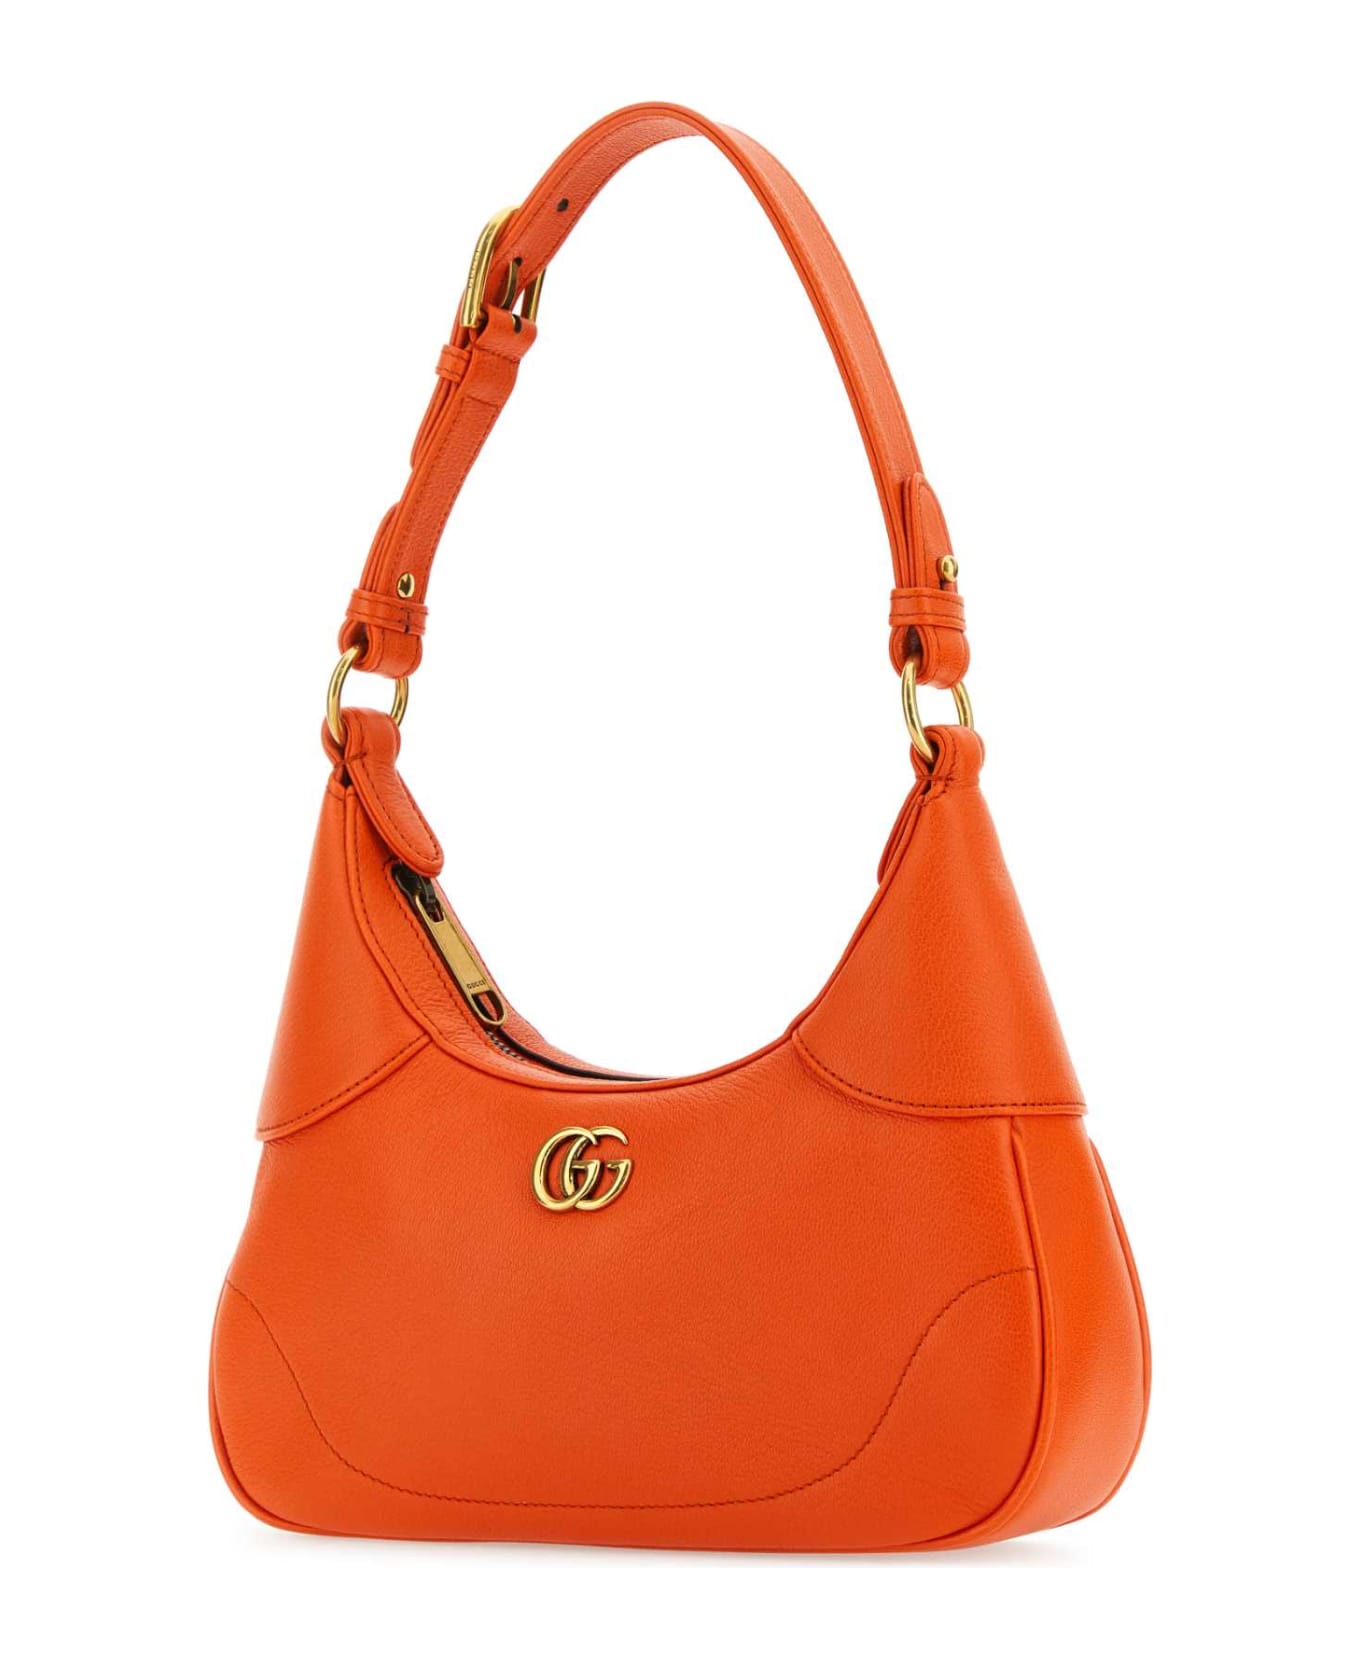 Gucci Orange Leather Small Aphrodite Handbag - DEEPORANGE